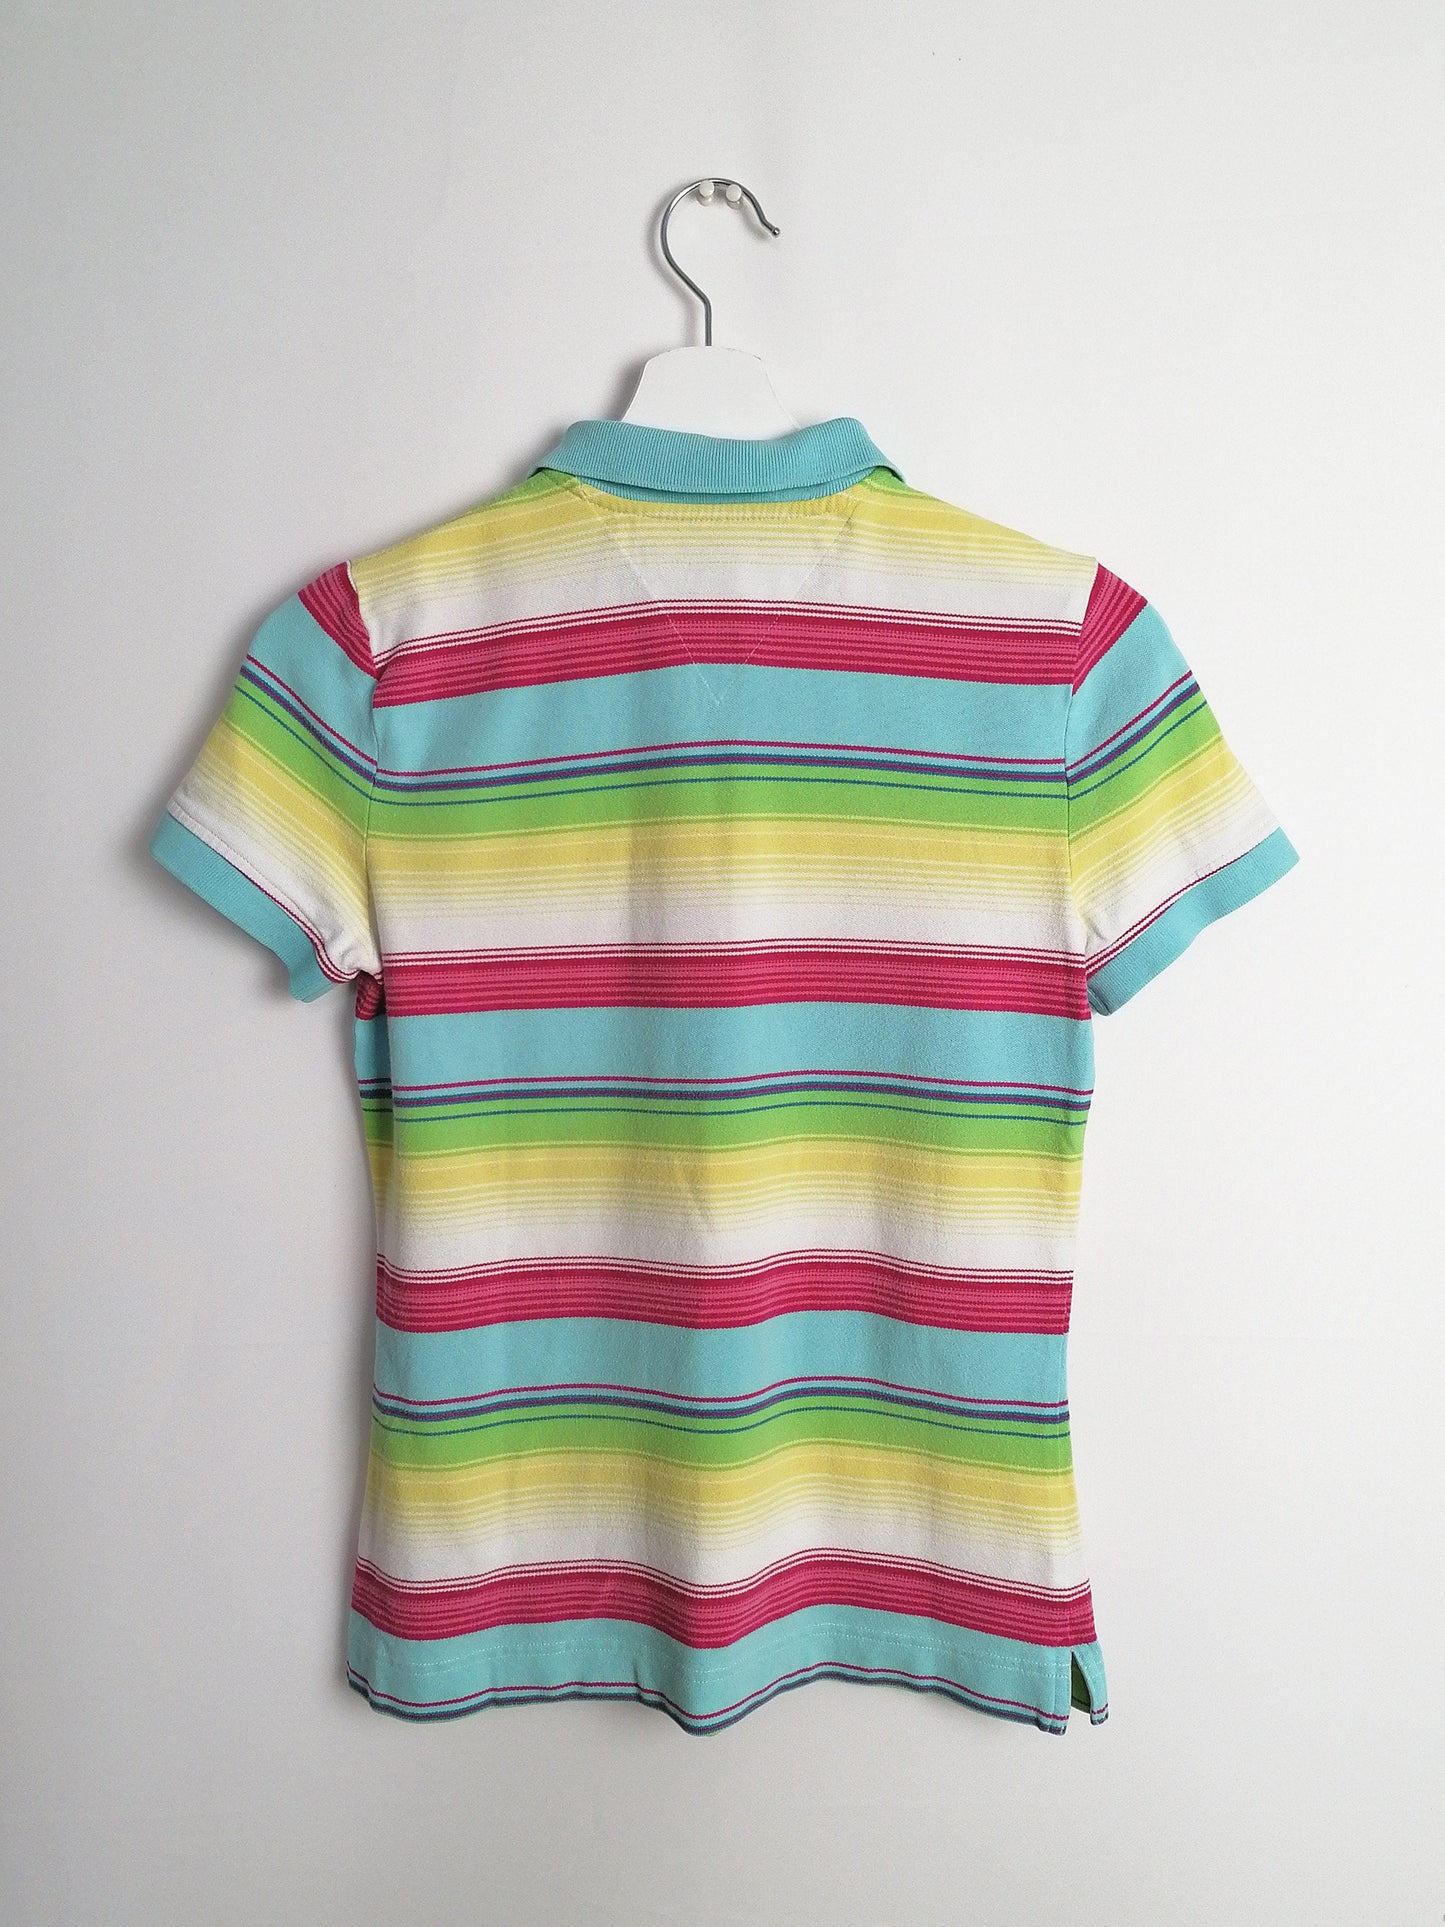 TOMMY HILFIGER Rainbow Stripes Polo T-shirt - size S